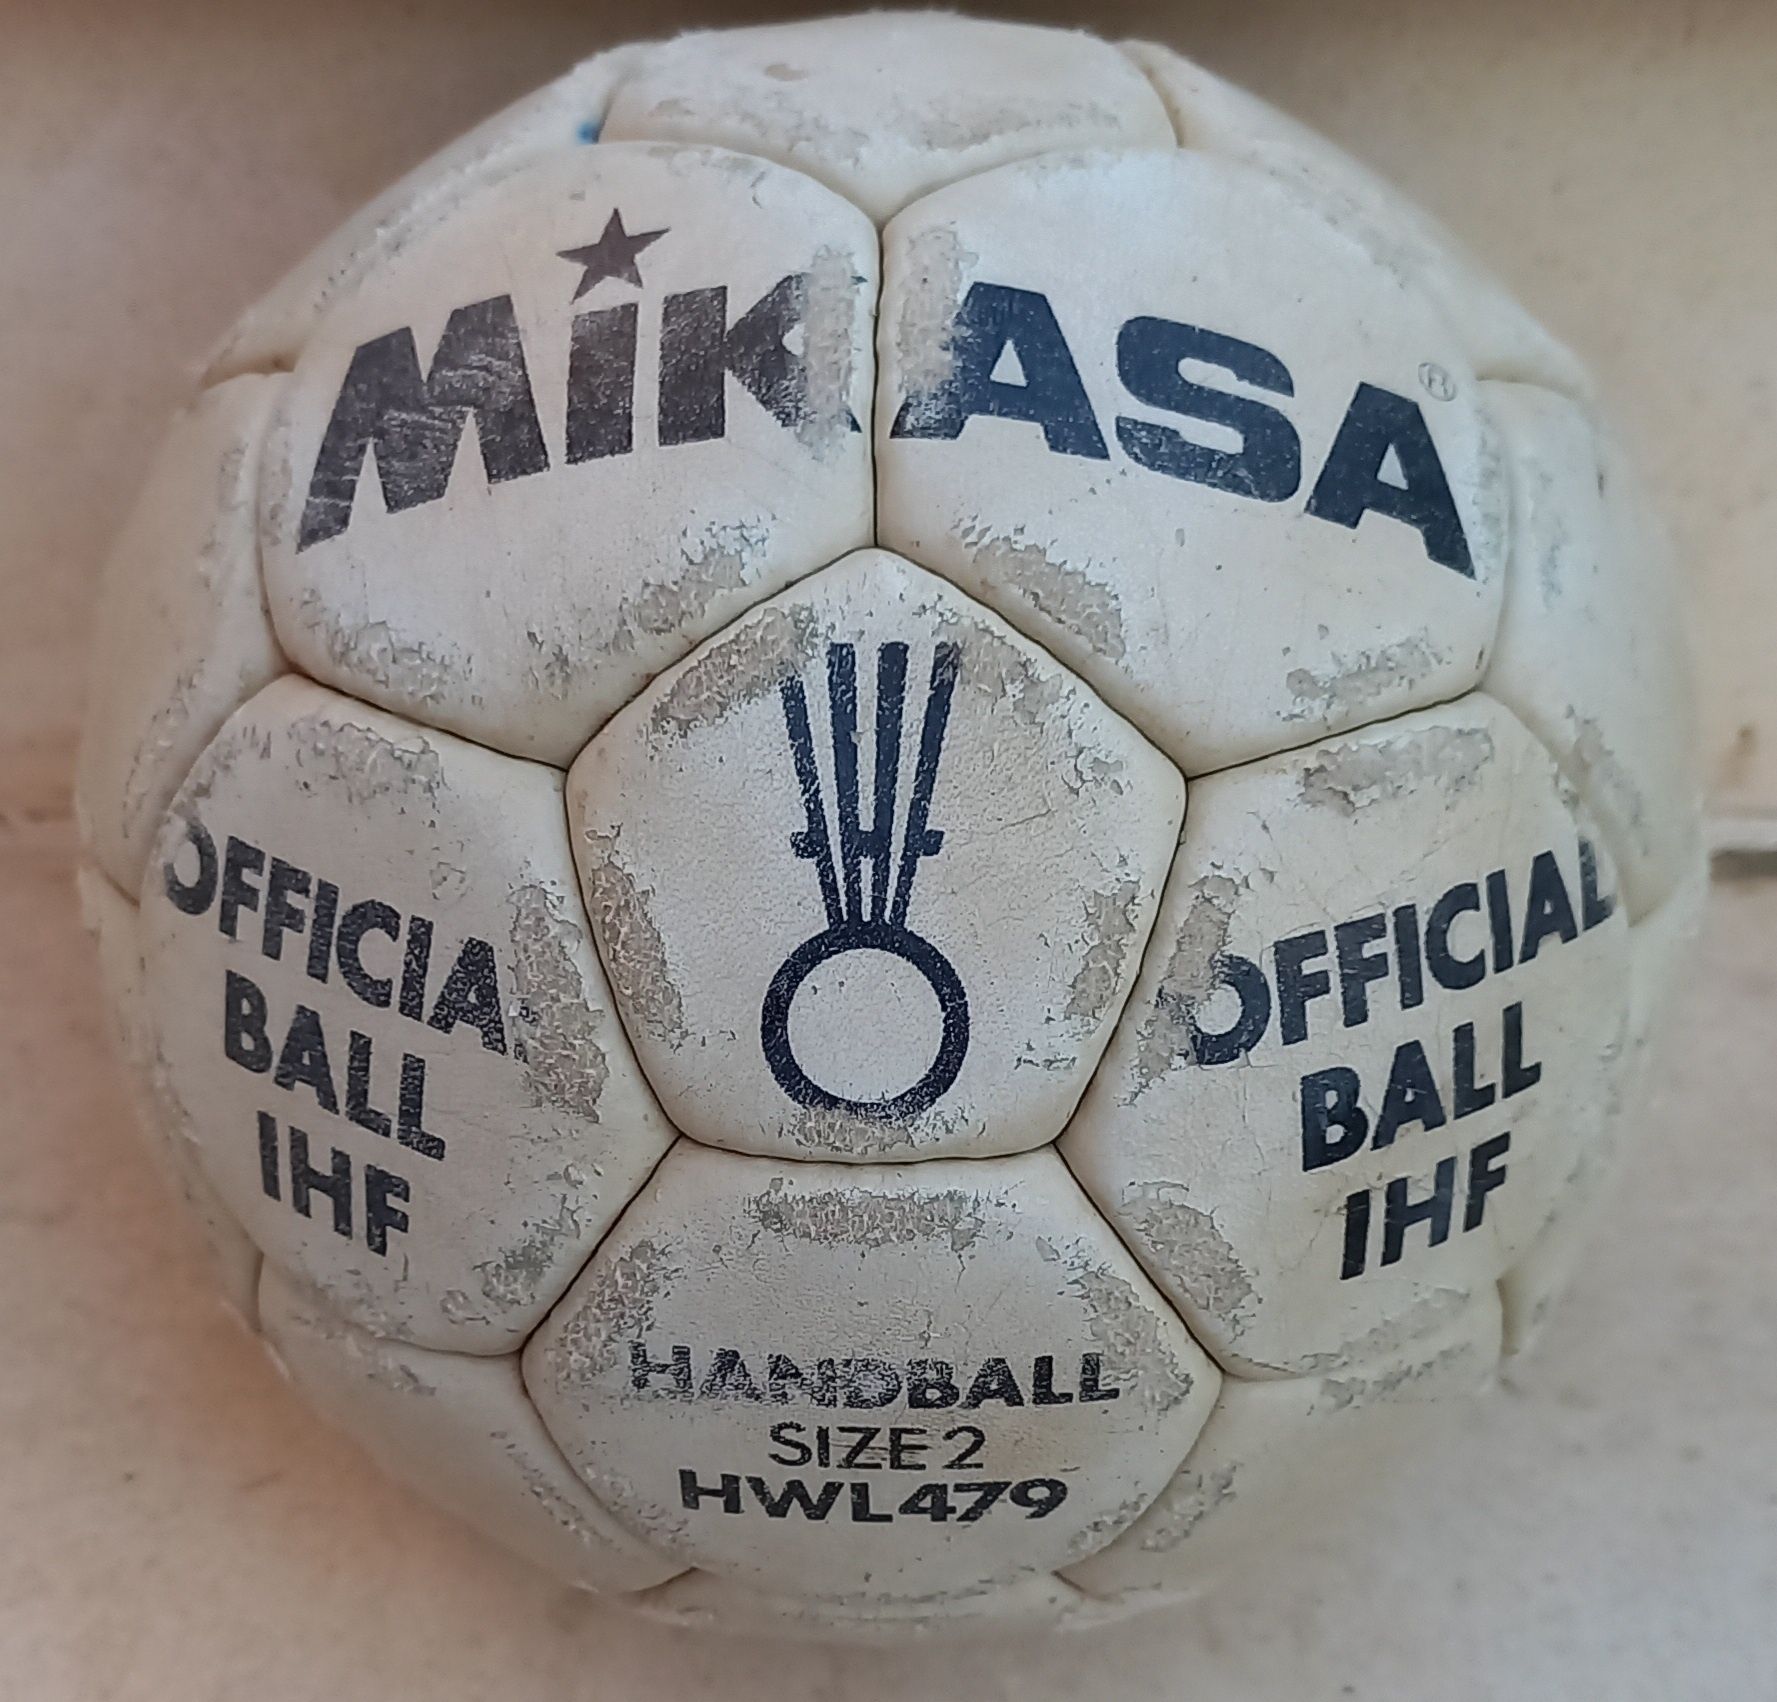 Bola de Andebol da marca Mikasa